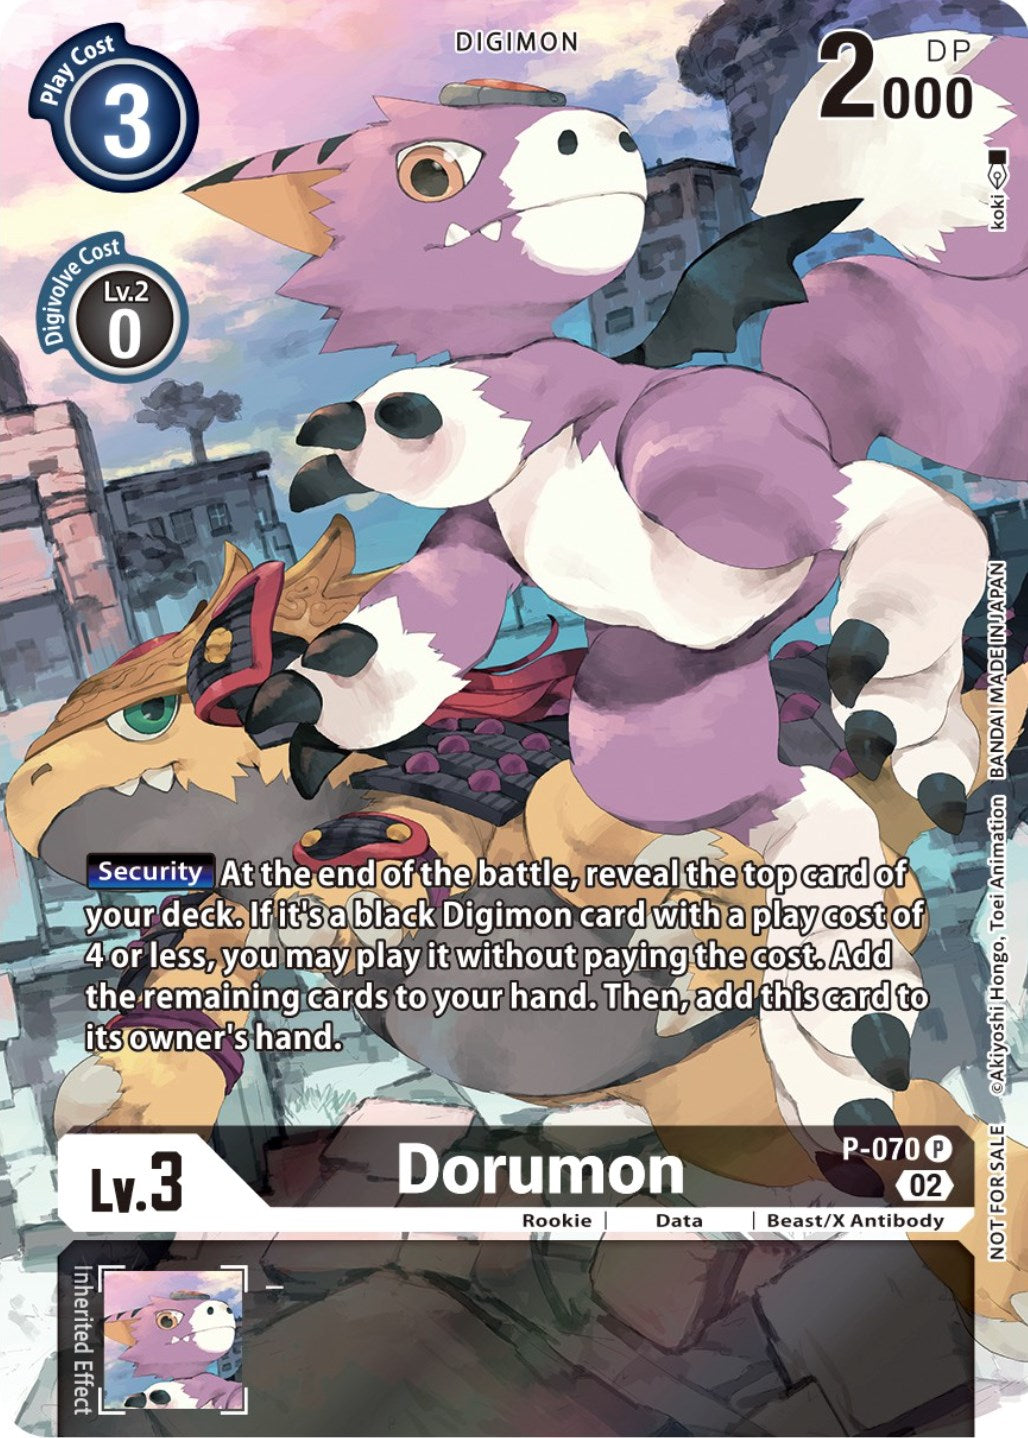 Dorumon [P-070] (Official Tournament Pack Vol. 10) [Promotional Cards] | Black Swamp Games